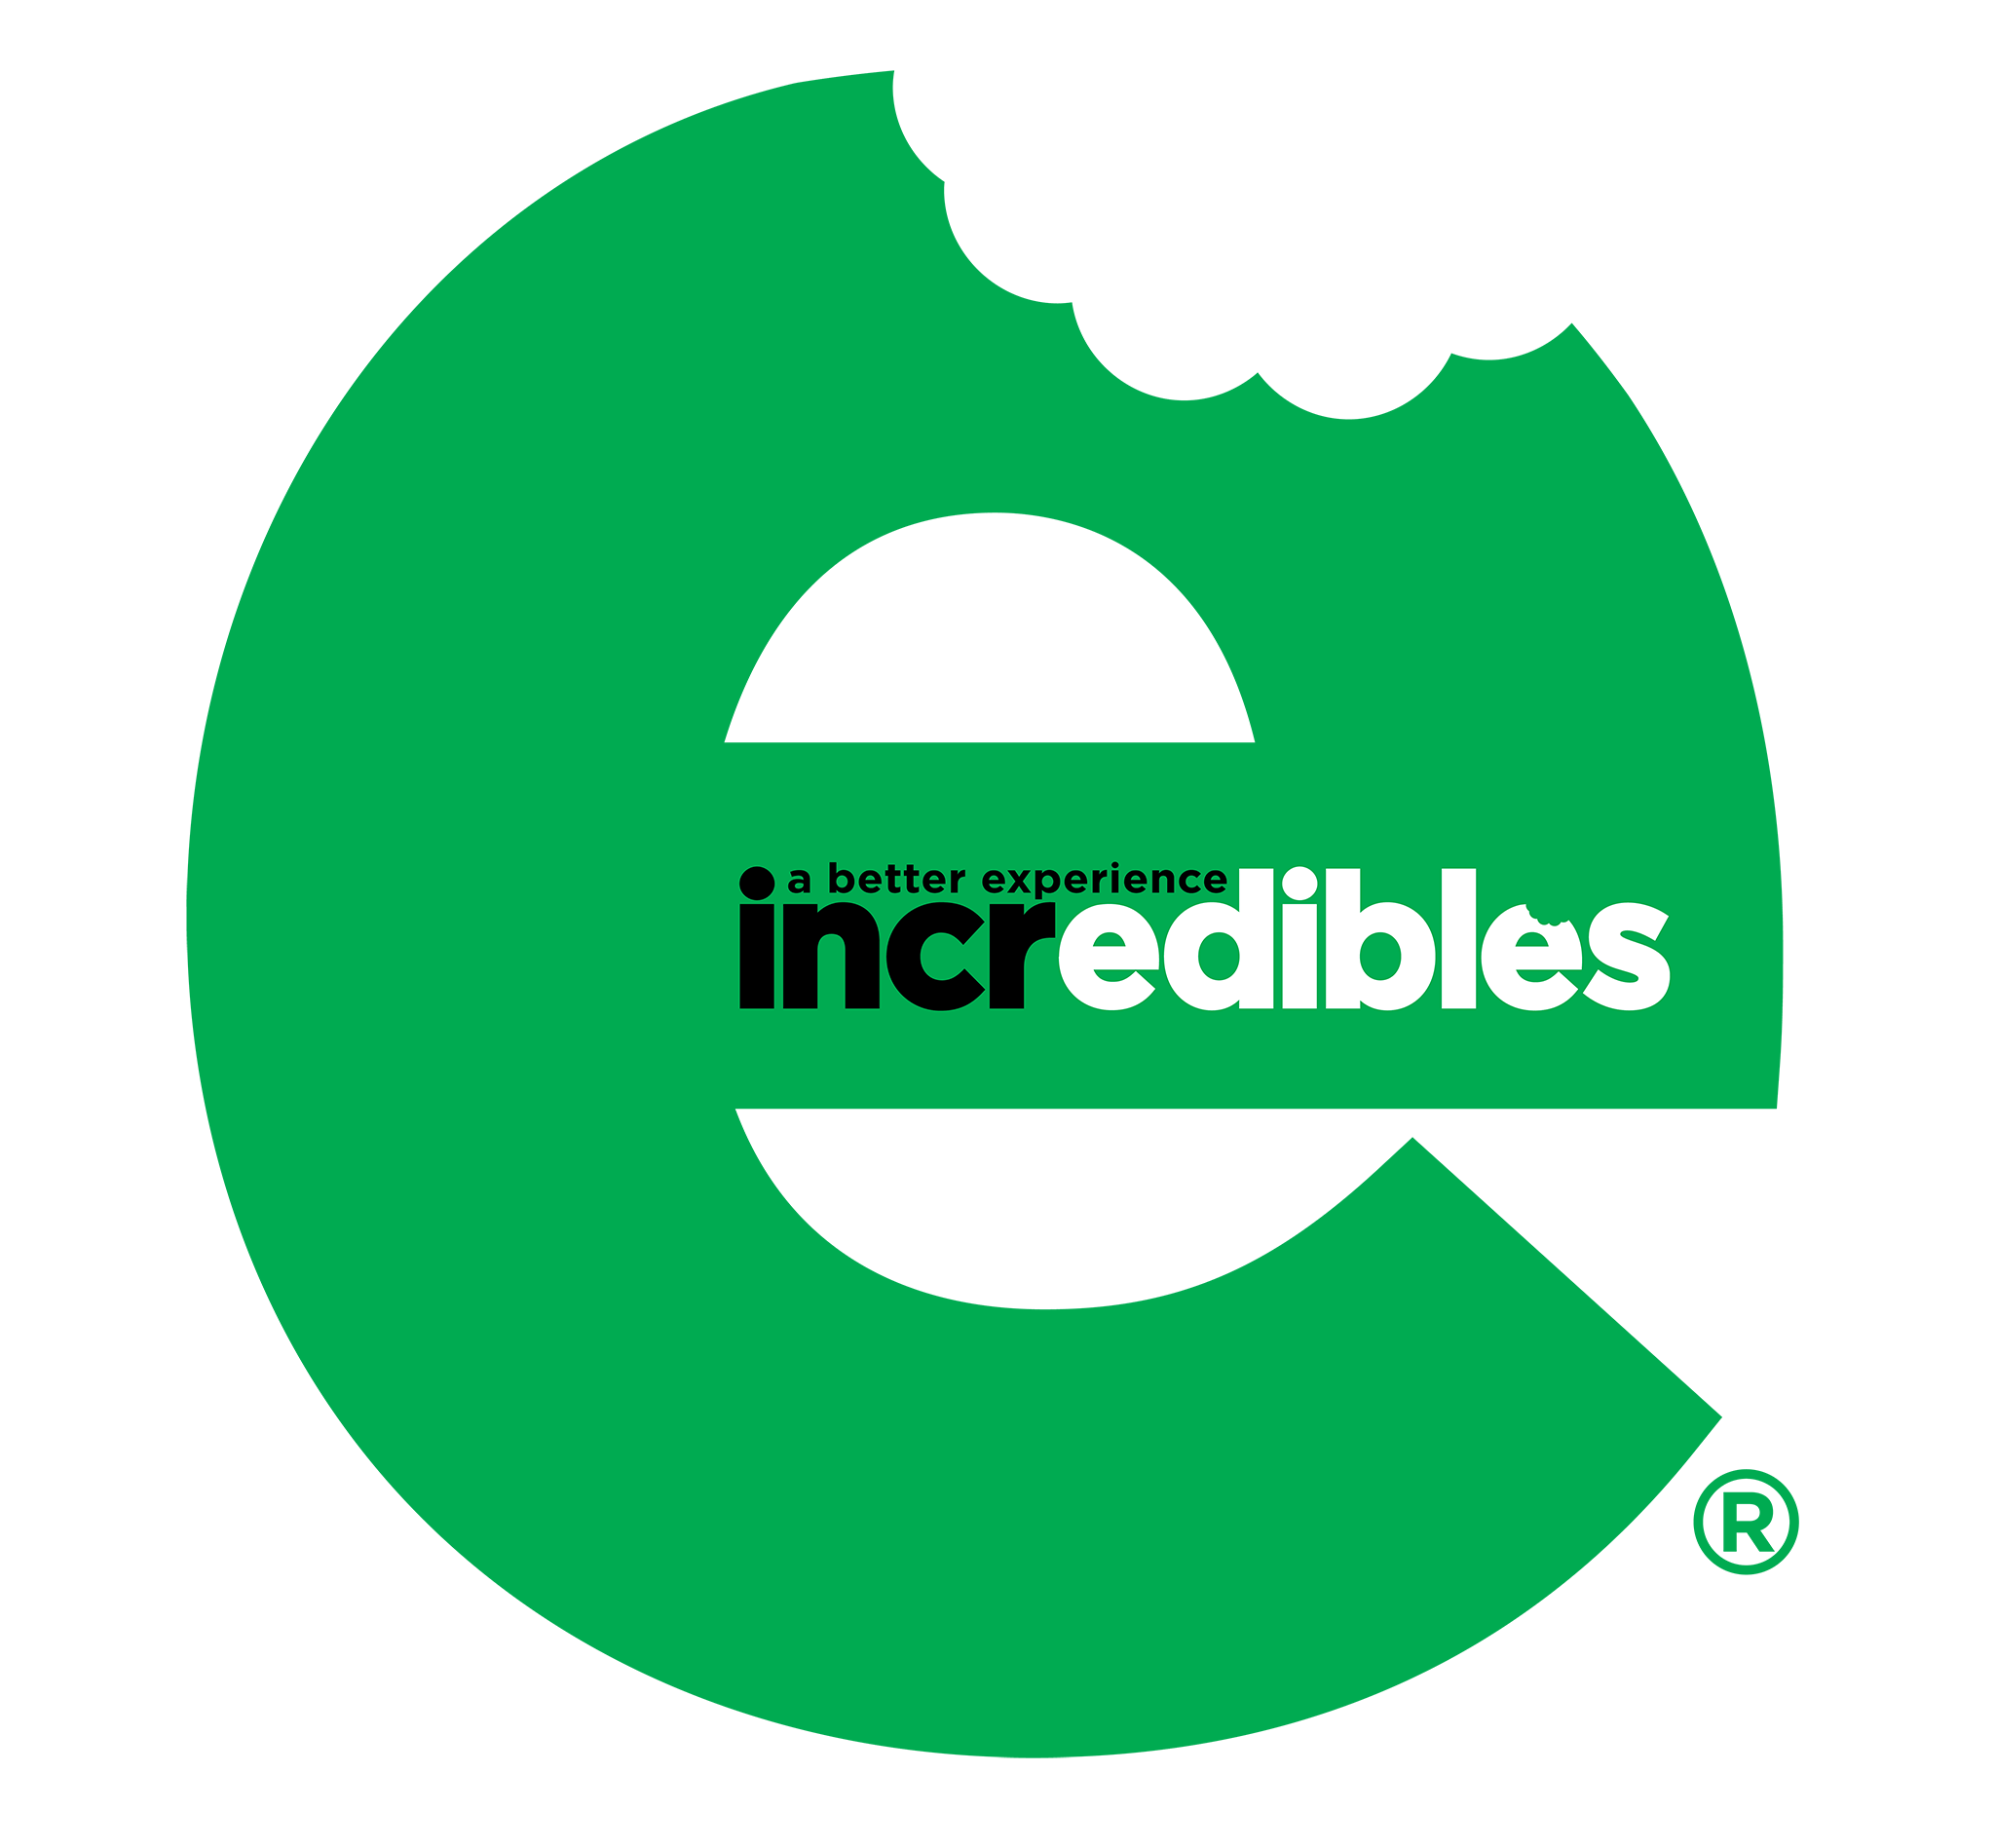 edible-incredibles-cbd-bars